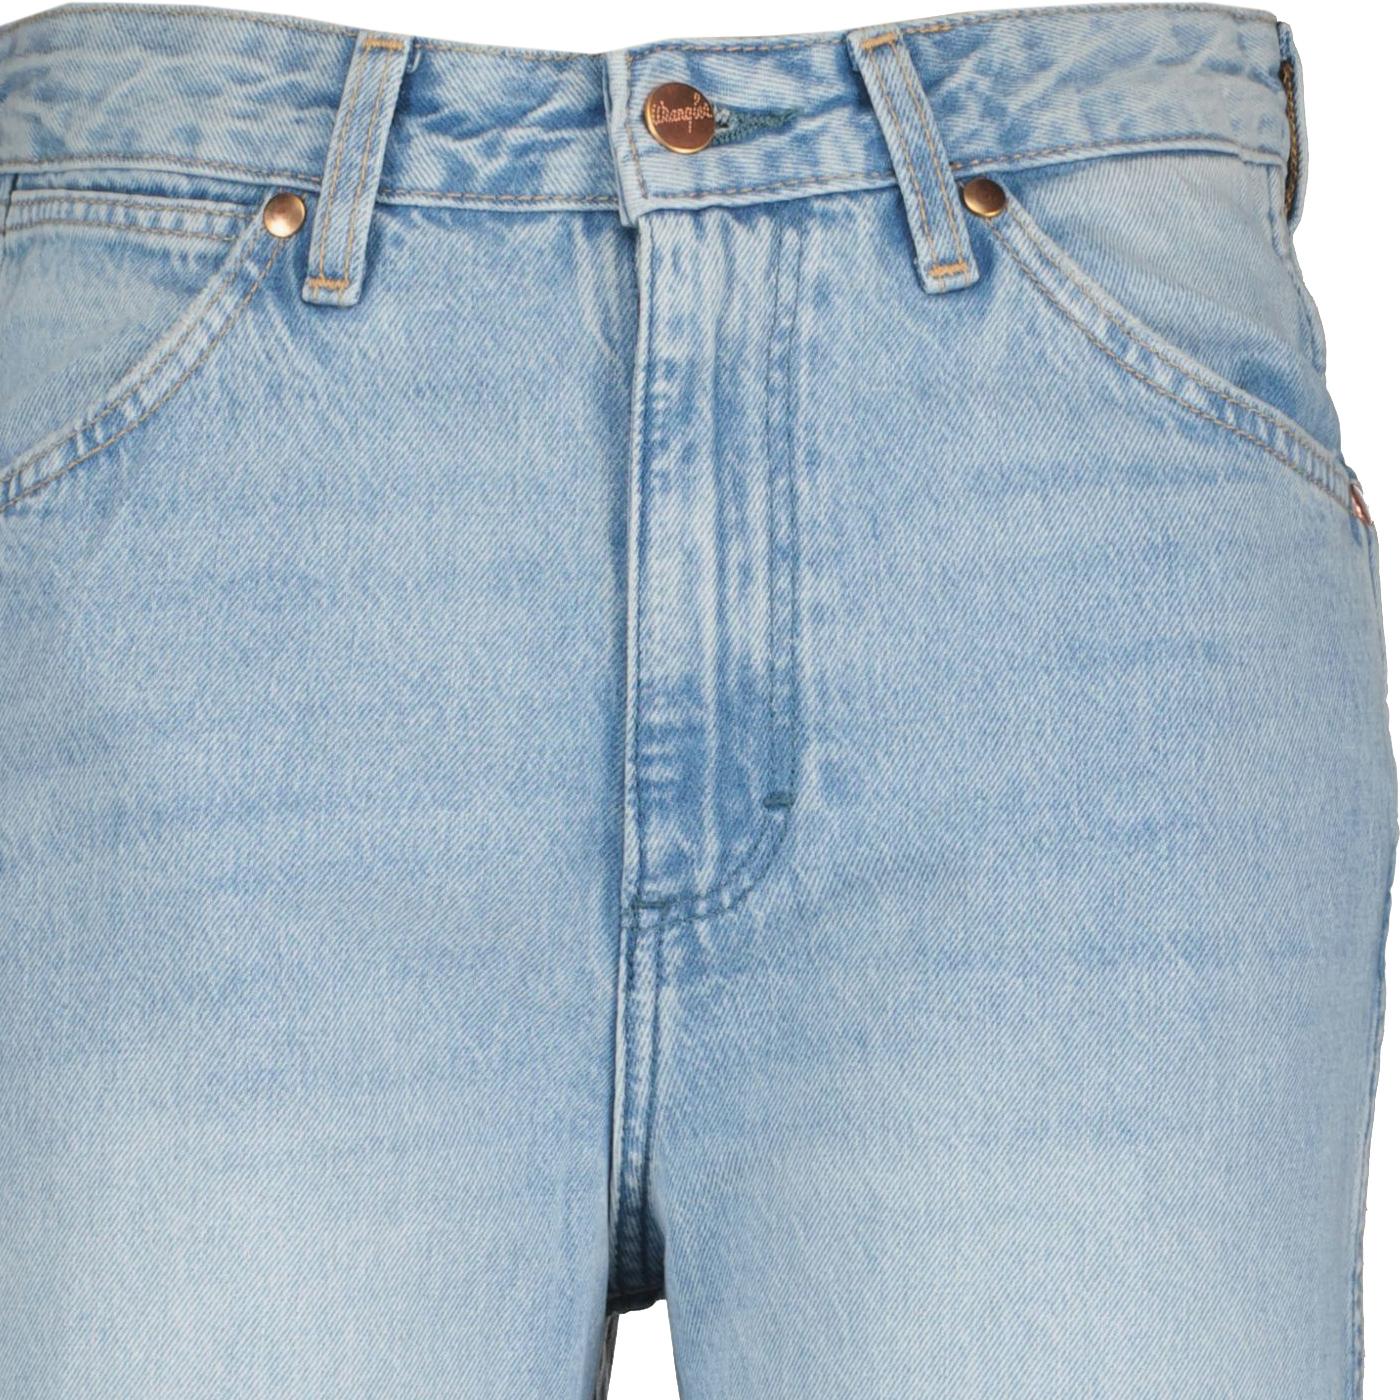 Wrangler Women's Westward Heritage Dark Wash High Rise Flare Jeans